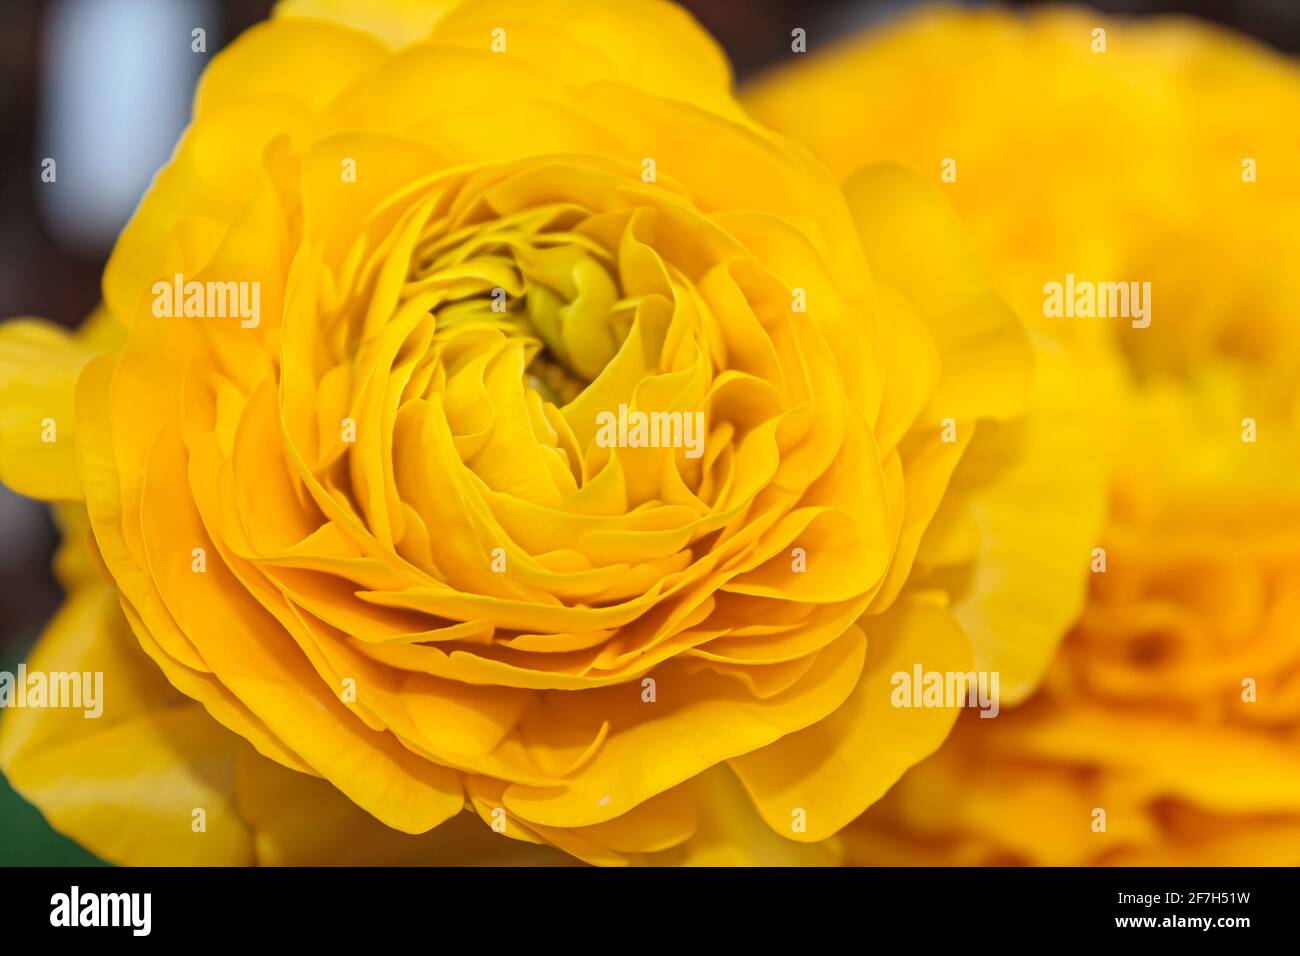 Yellow peony flower closeup view Stock Photo